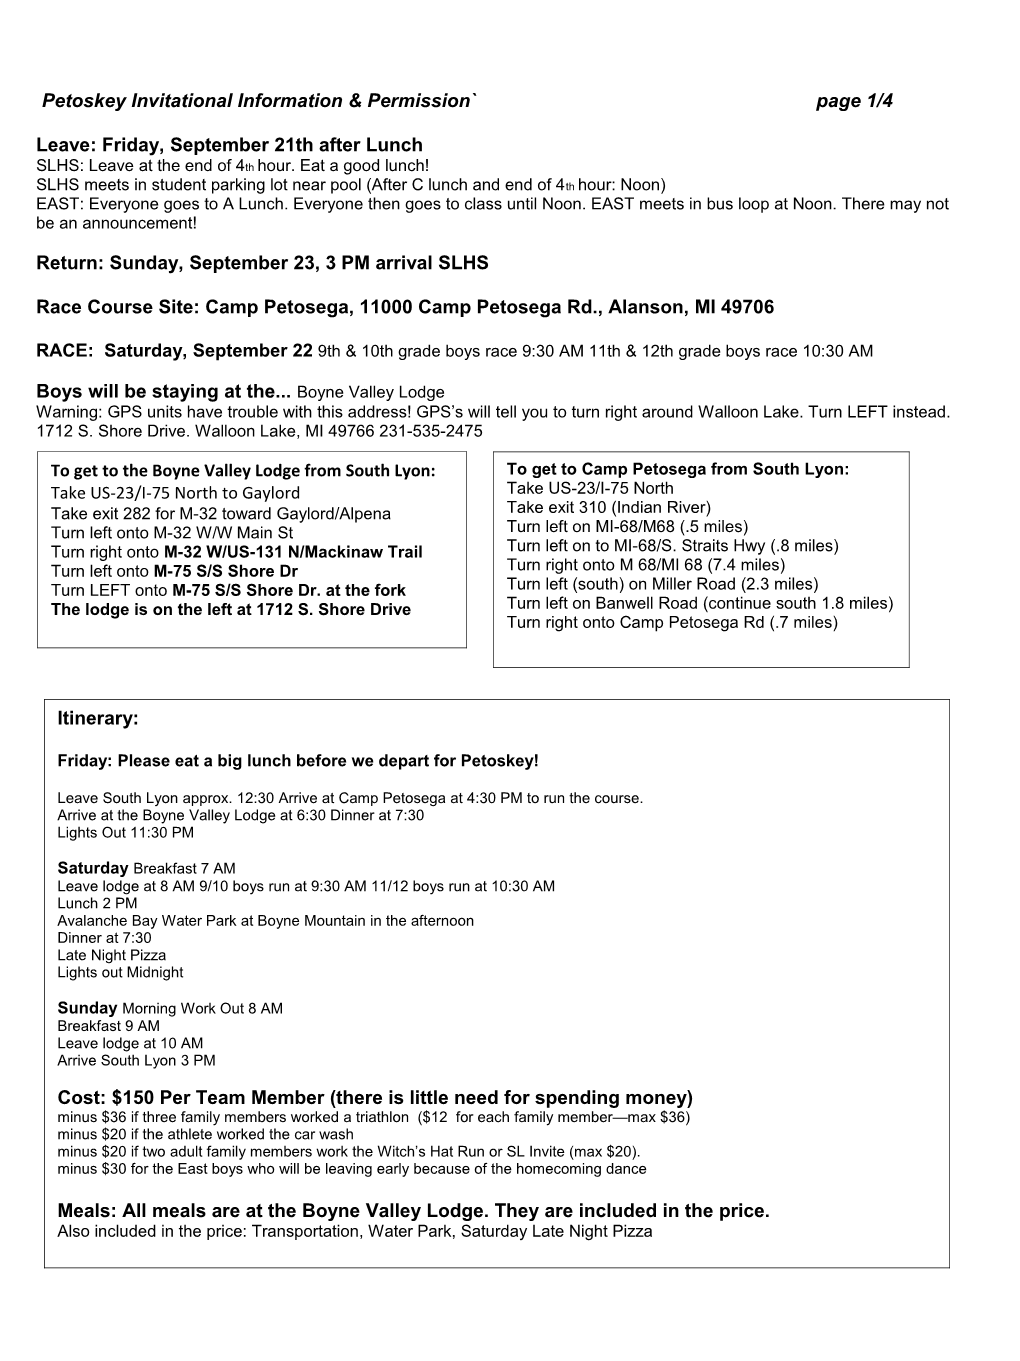 Petoskey Invitational Information & Permission Page 1/4